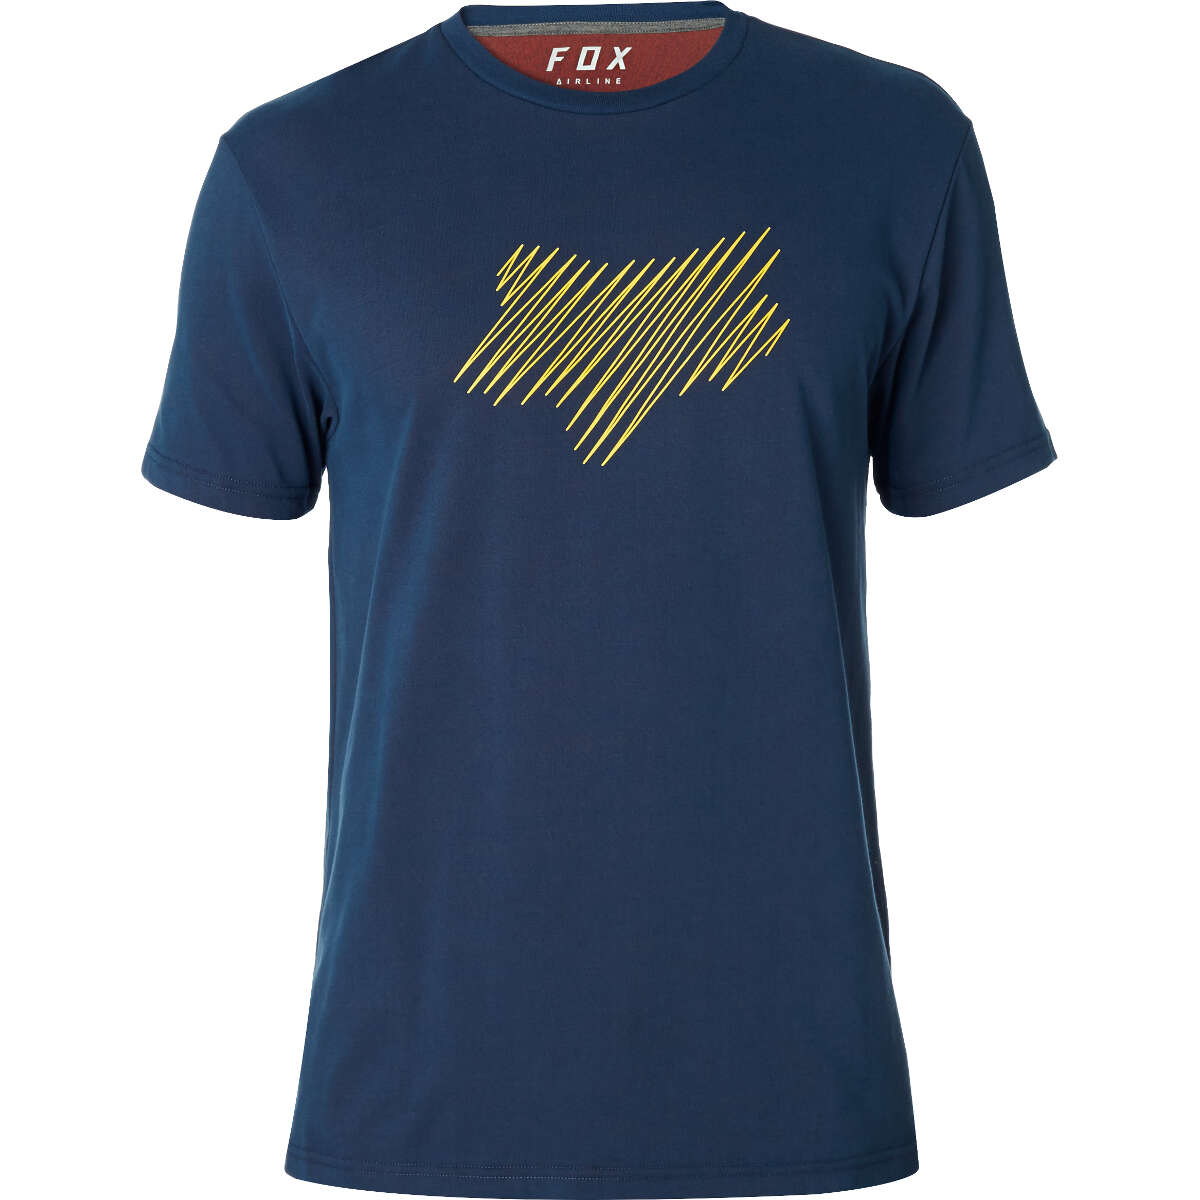 Fox T-Shirt Cresent Airline Navy/Rot